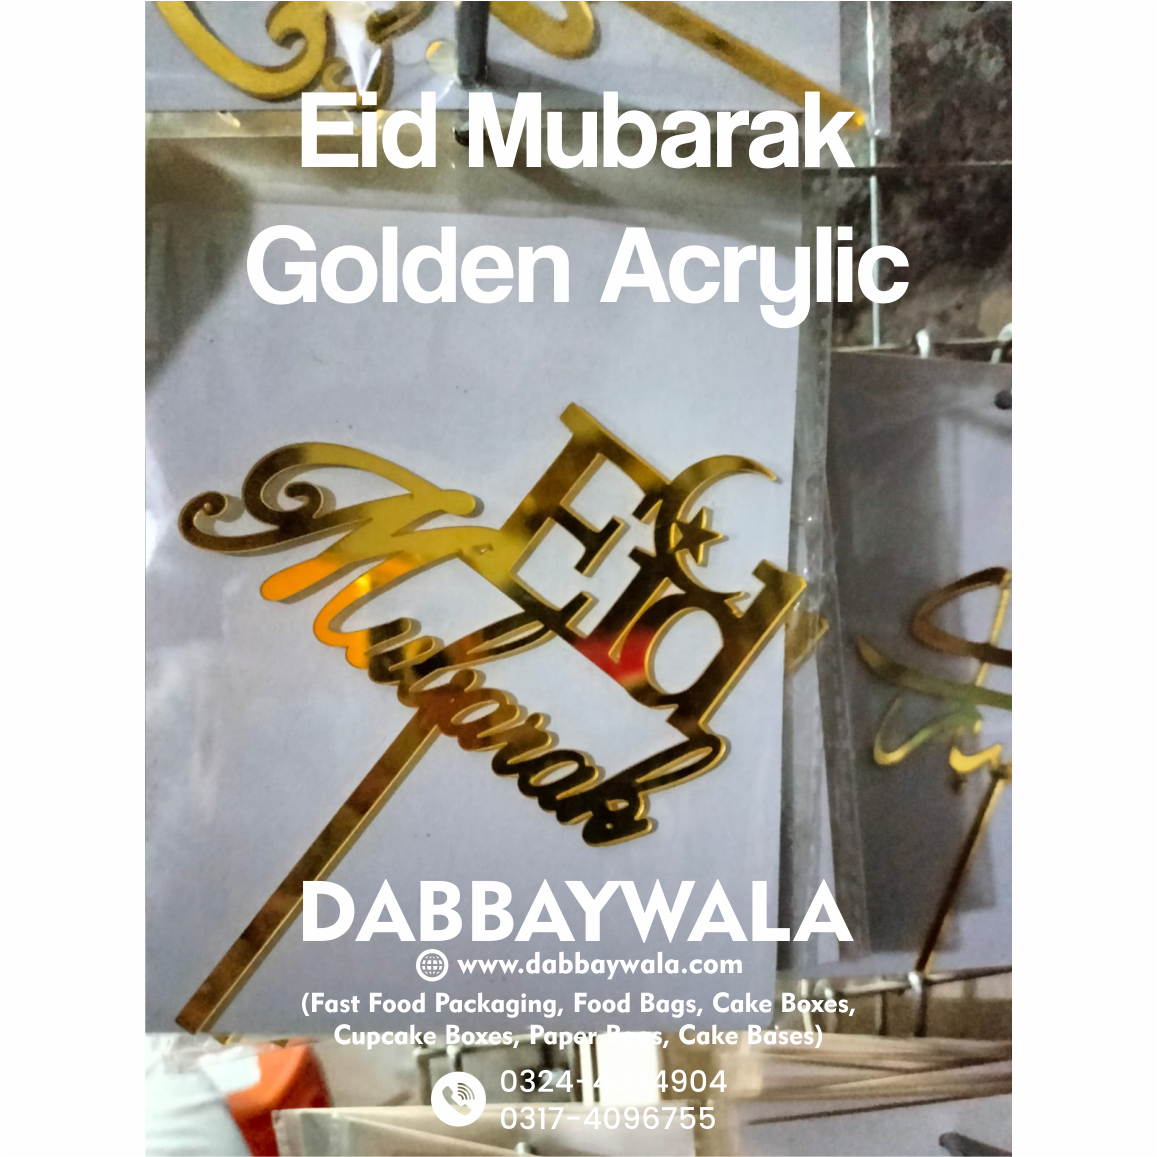 Golden Acrylic Eid Mubark with Moon Cake Topper